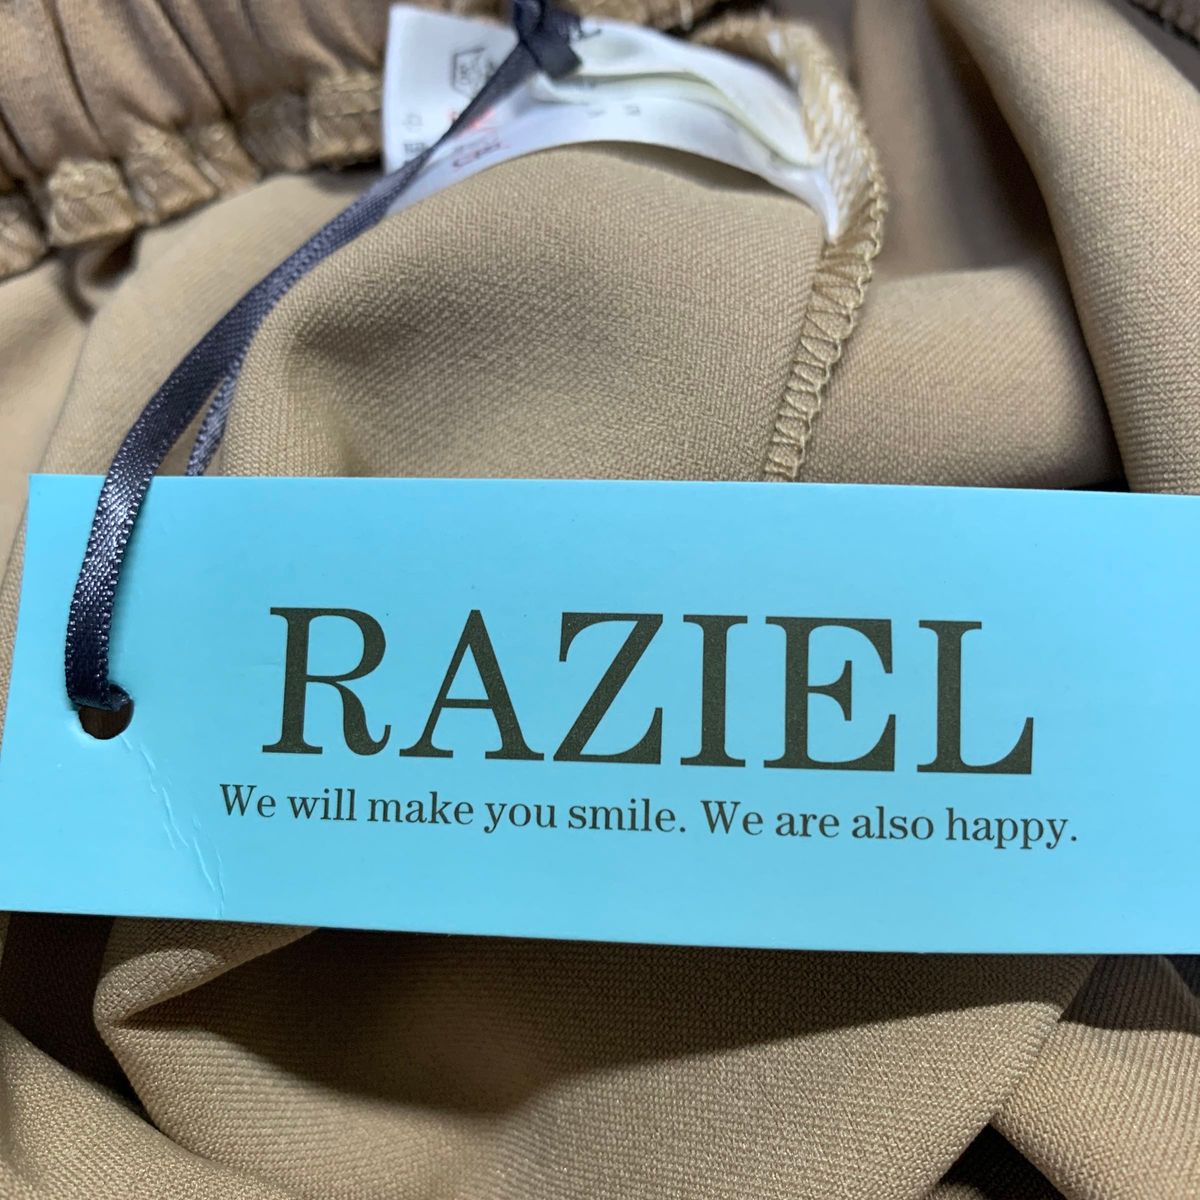 RAZIEL /ラップキュロットスカート